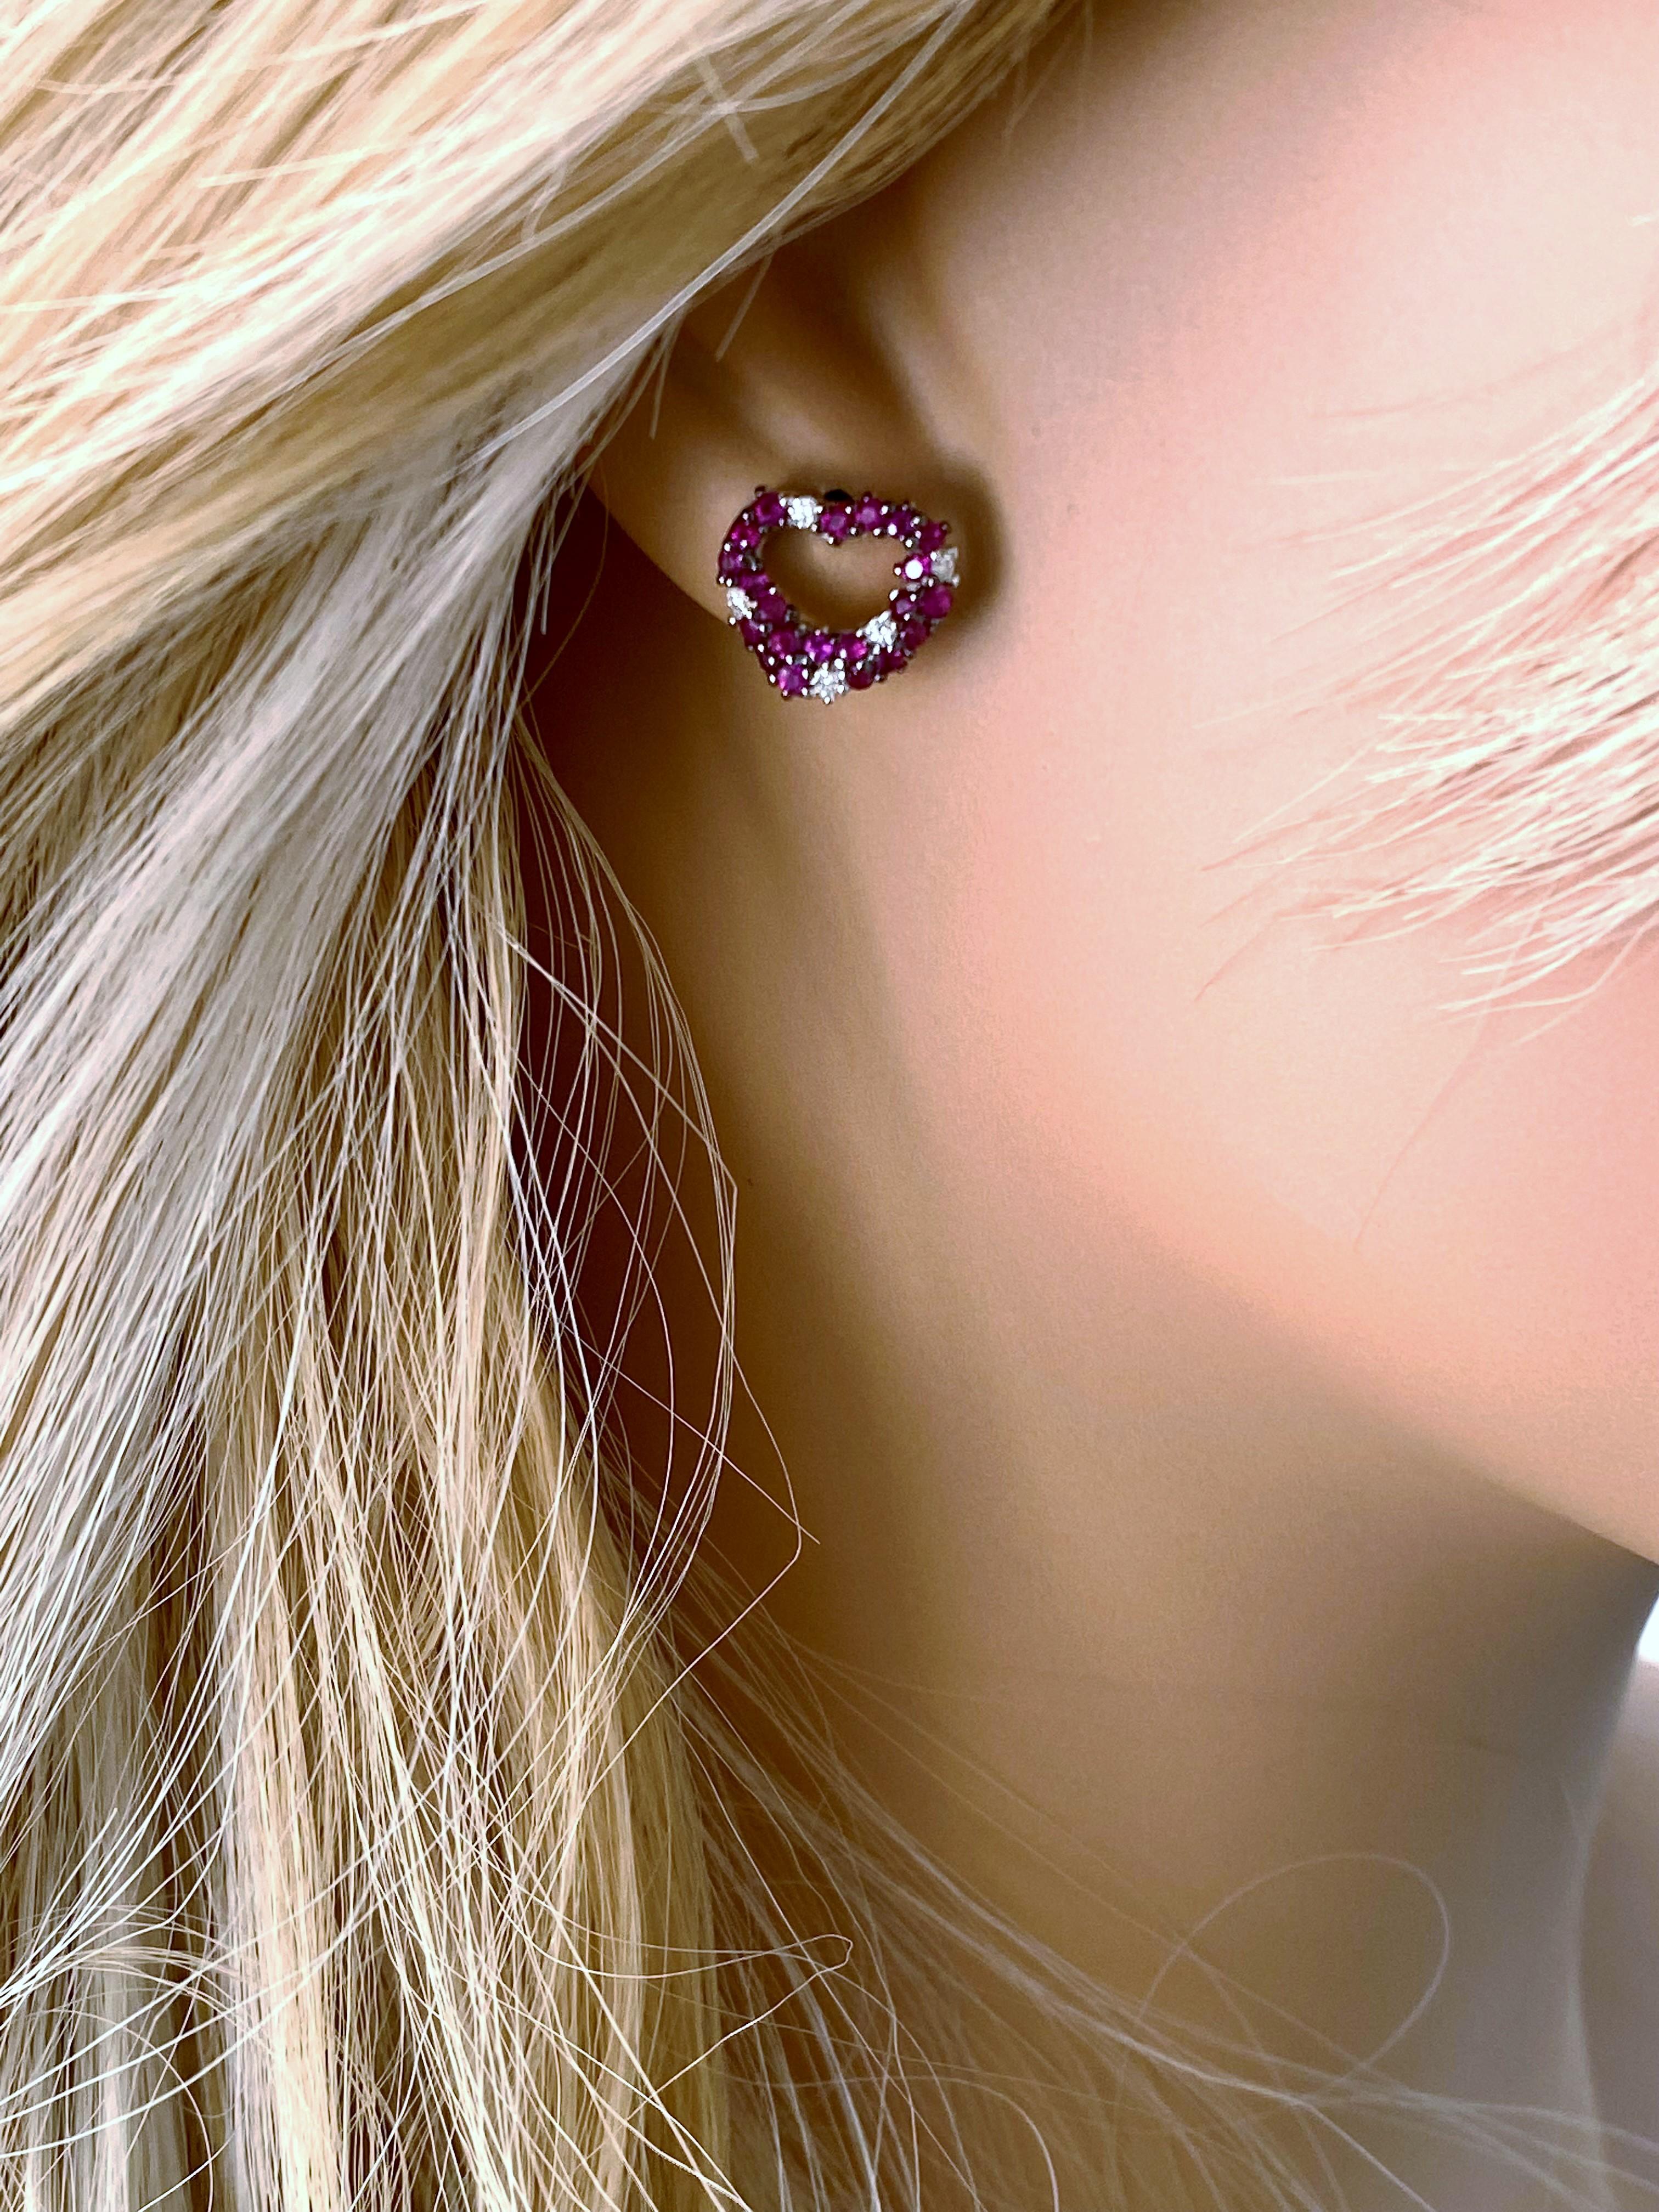 heart shaped ruby and diamond earrings